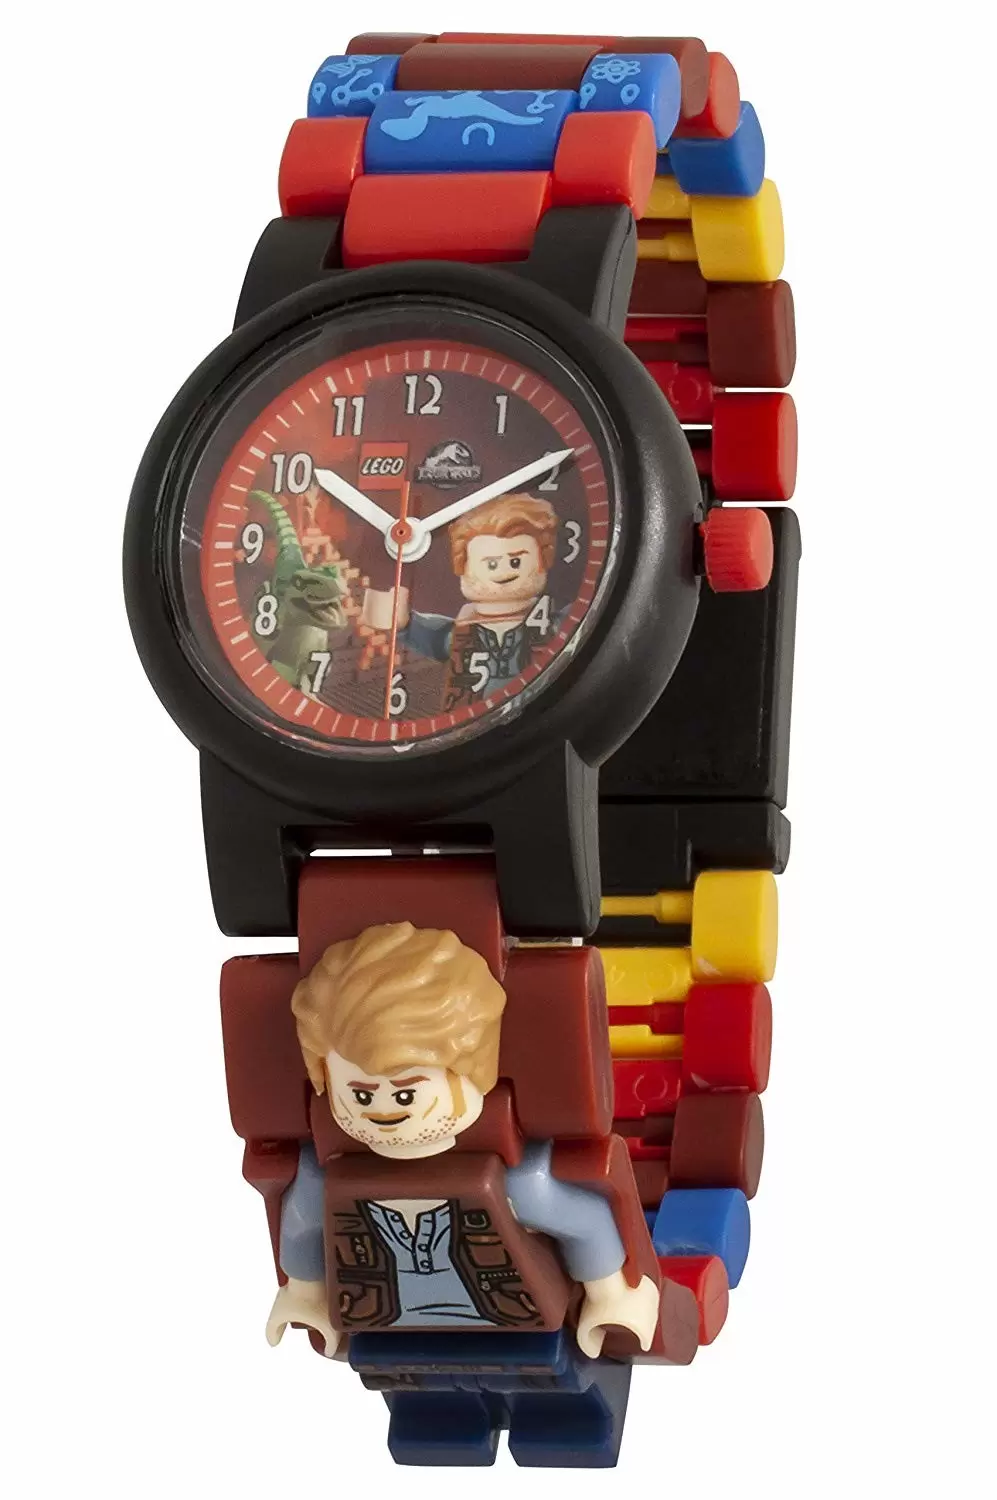 LEGO Watches - LEGO Jurassic World Watch - Owen